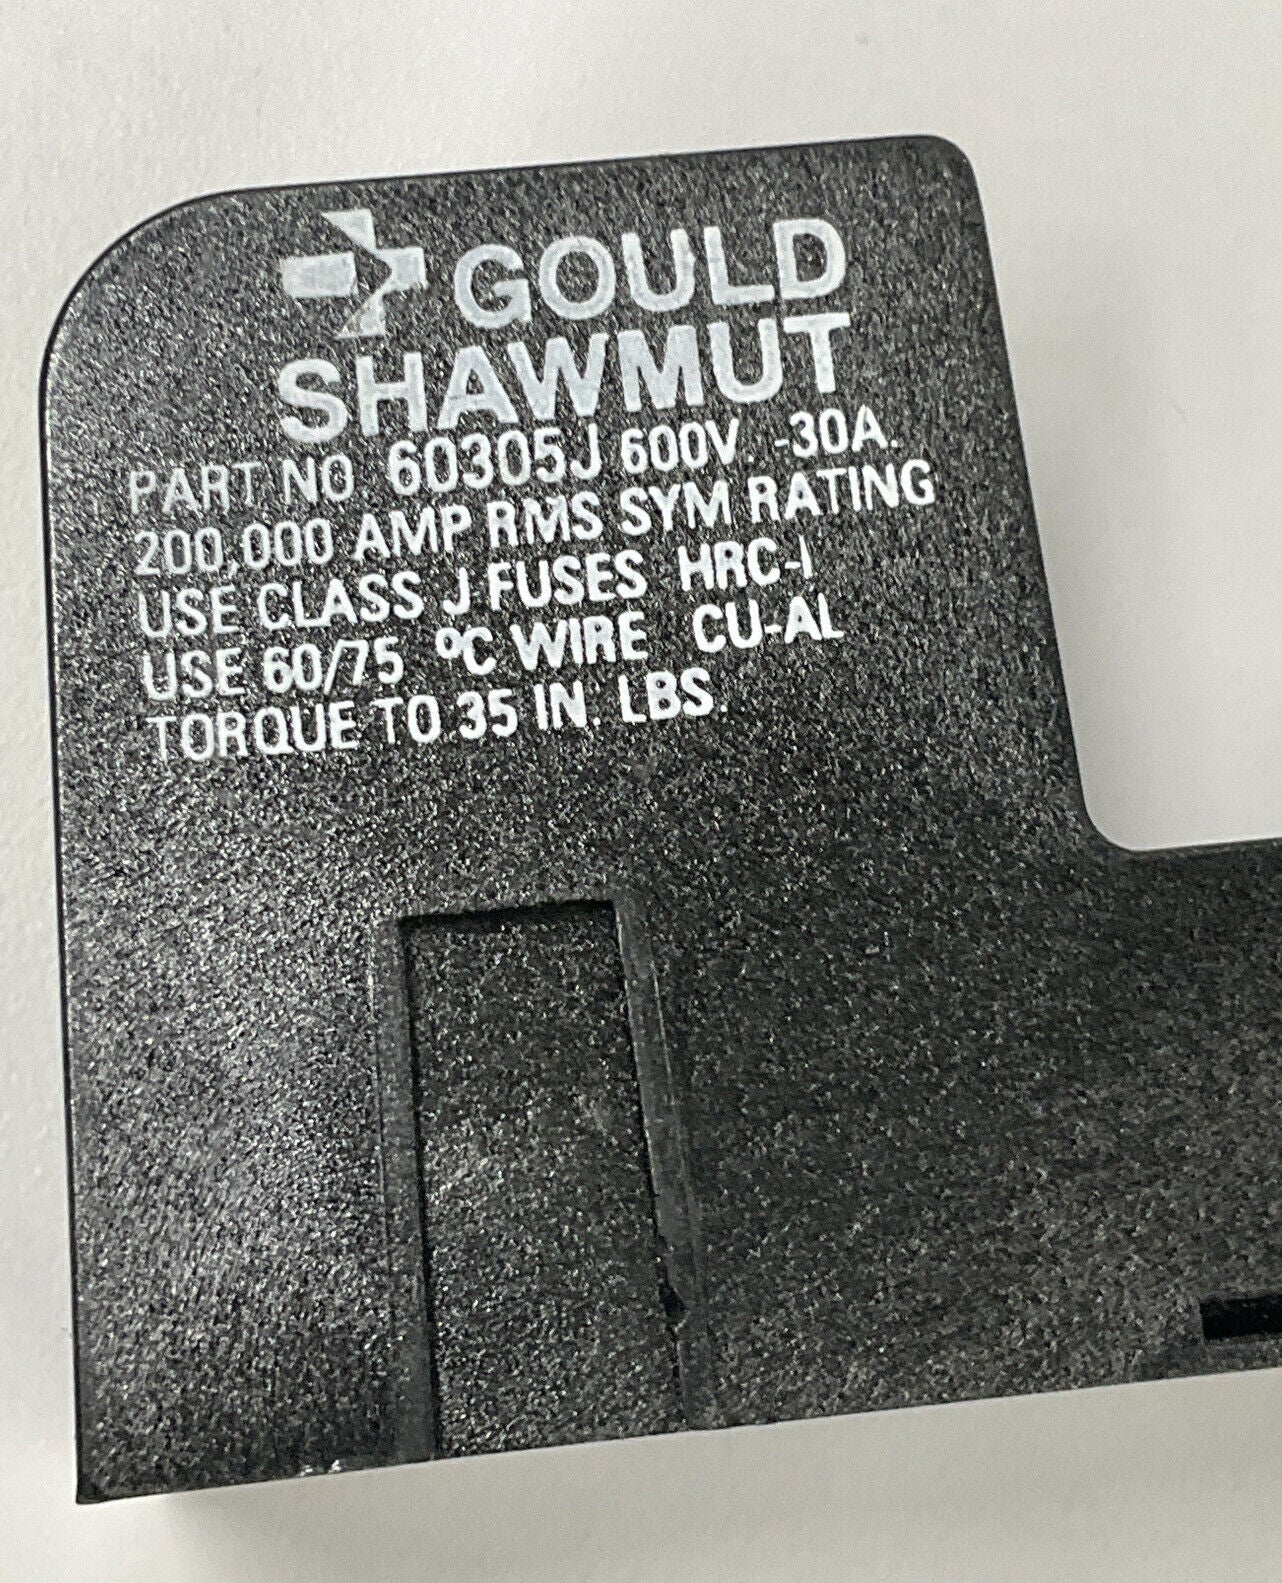 Gould Shawmut 60305J New Adder Fuse Block for Class J Fuses, 600V 30A (BK150)